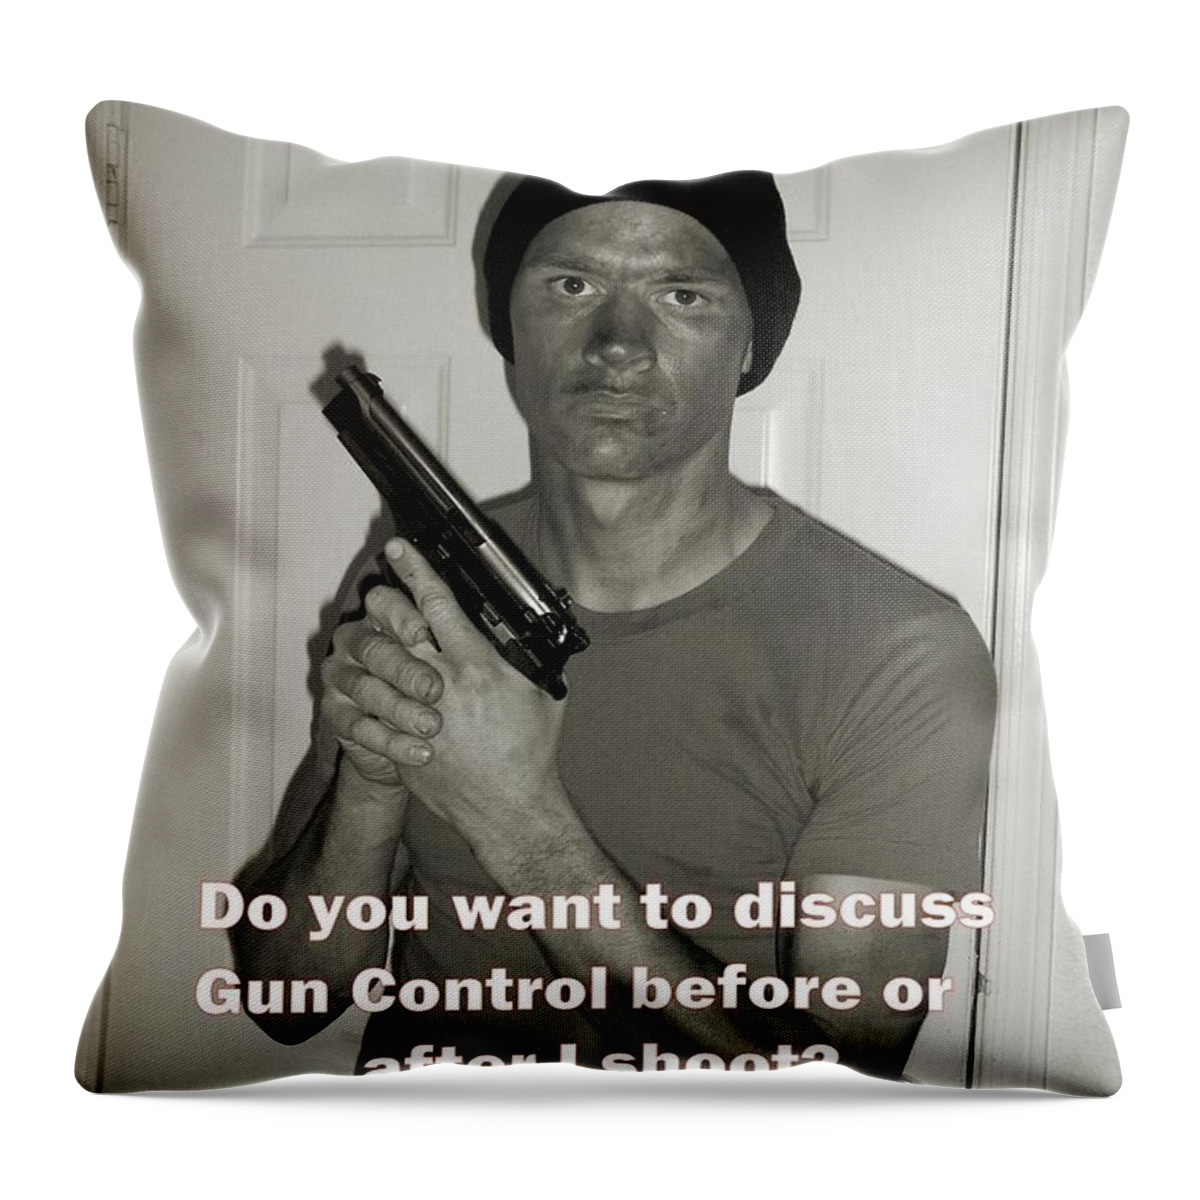 Humor Throw Pillow featuring the digital art Gun Control by Laura Smith